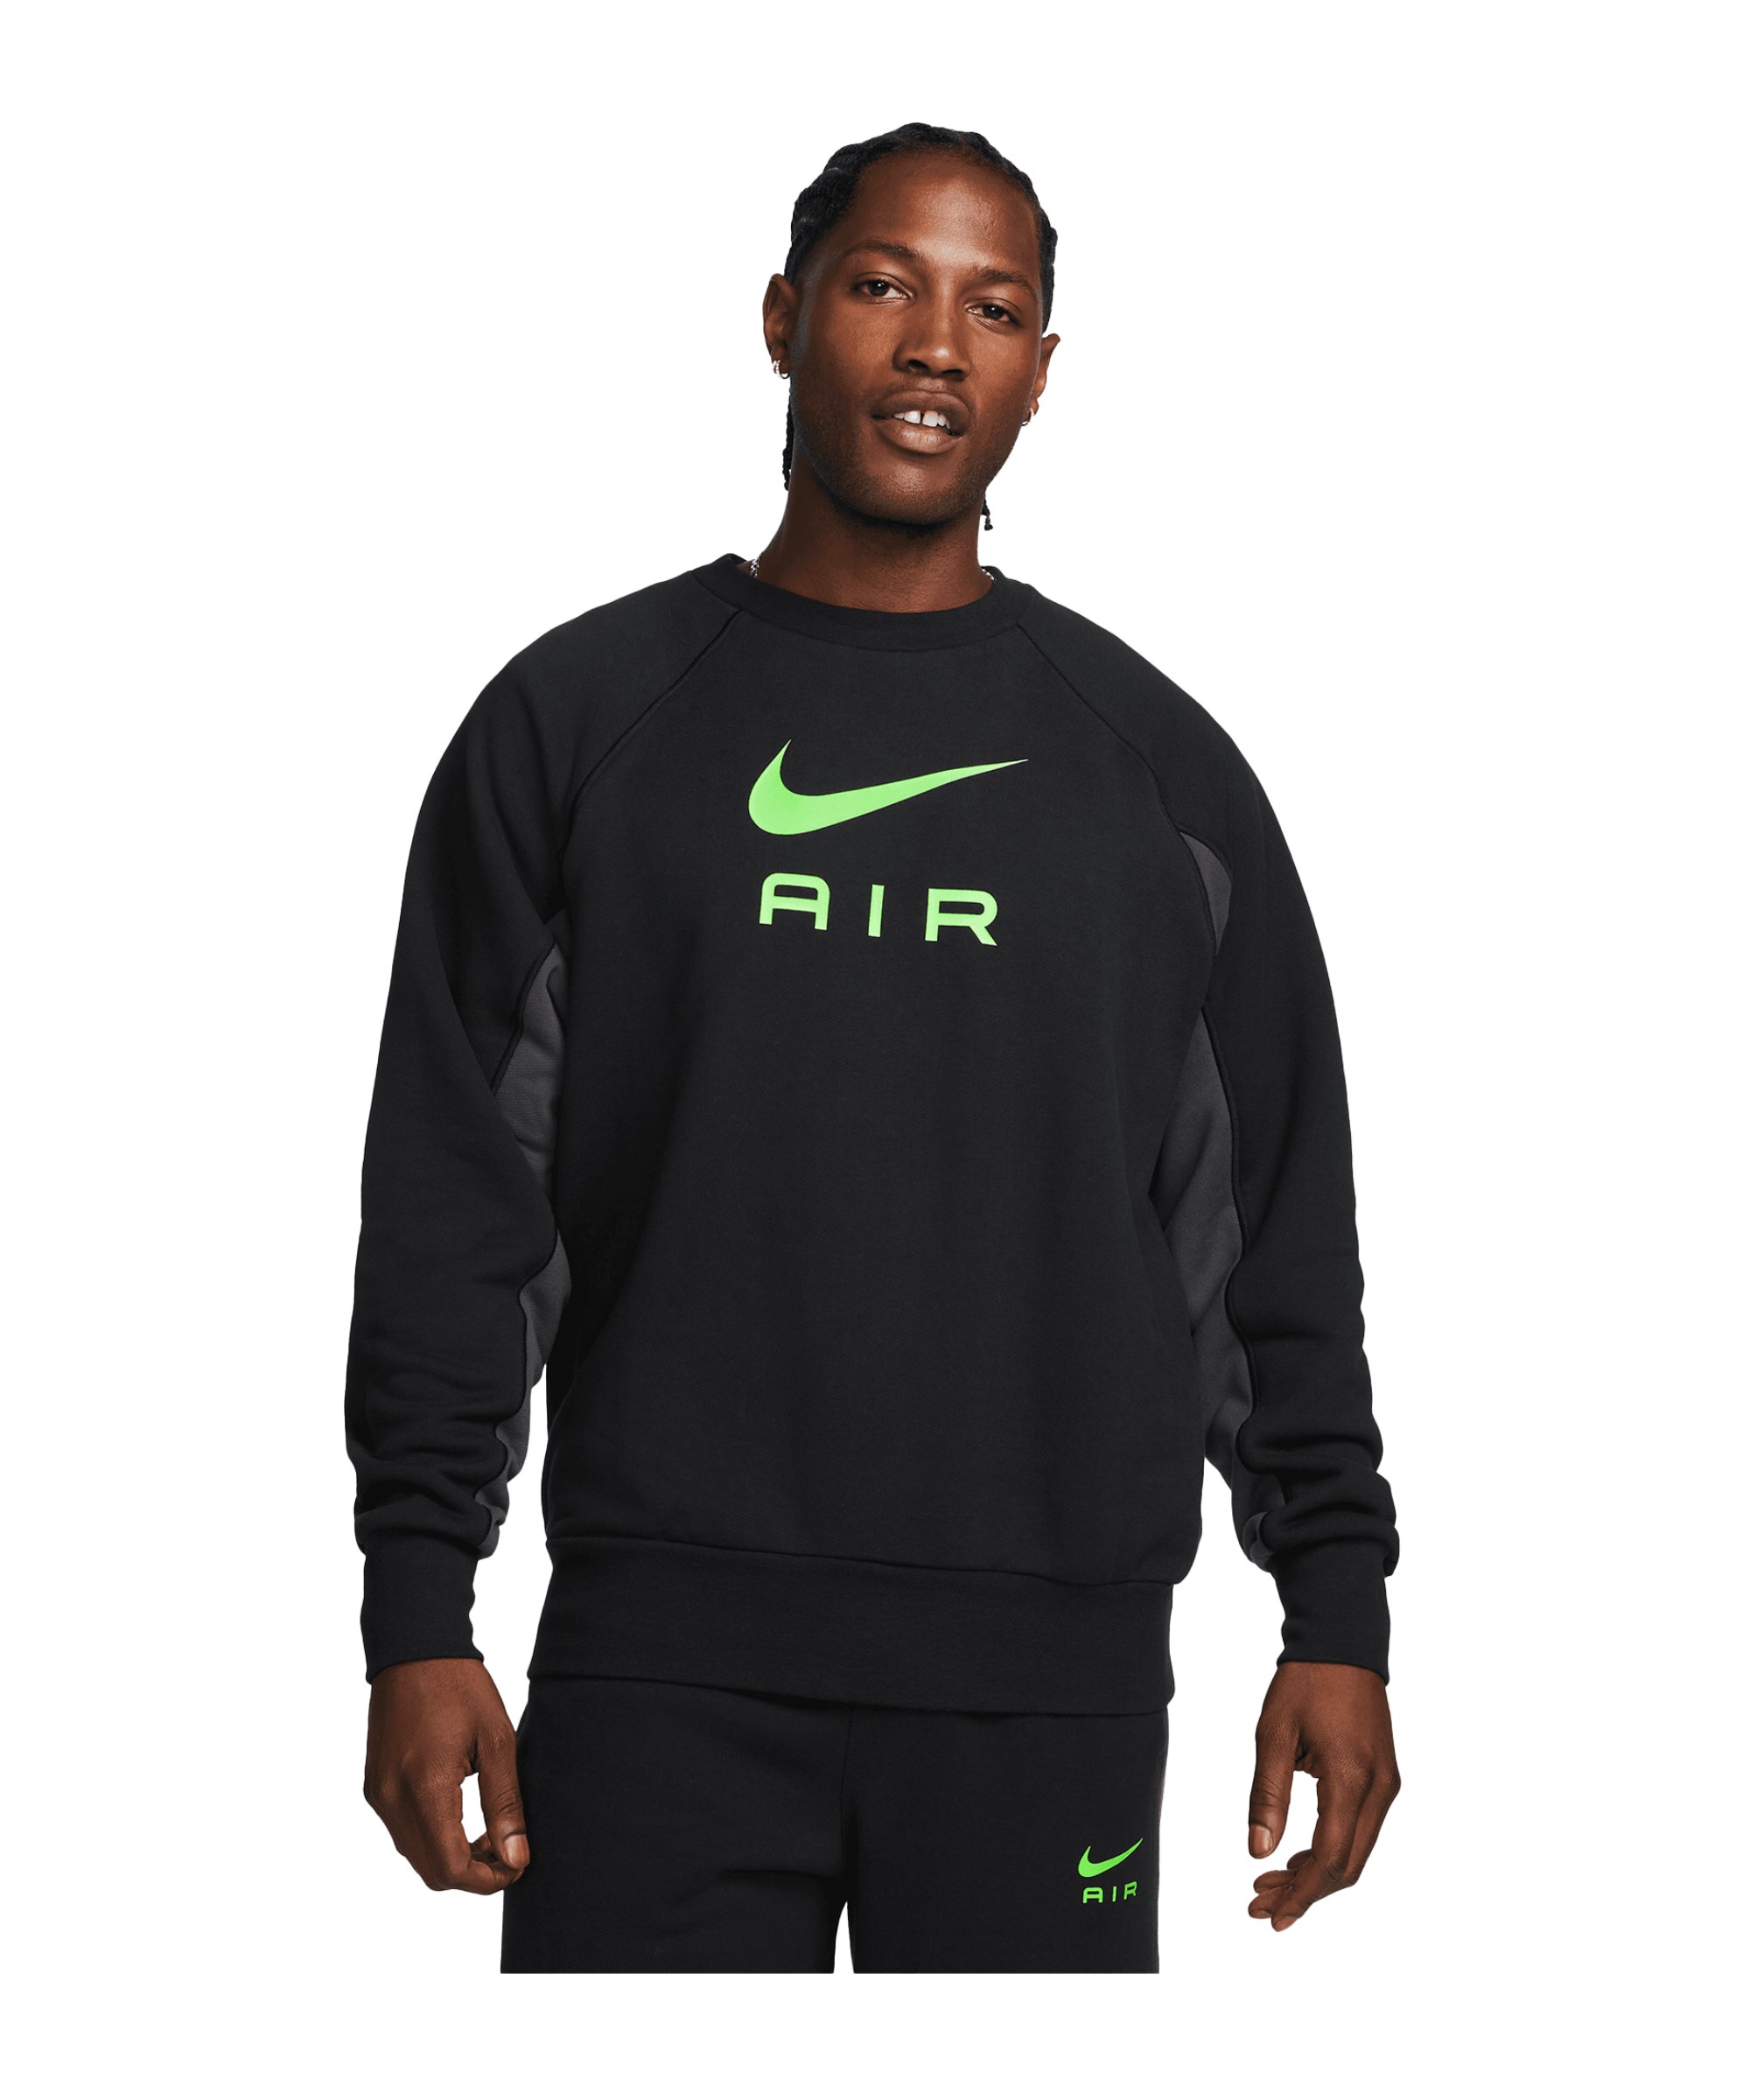 Nike Air FT Crew Sweatshirt Schwarz Grau Grün F011 - schwarz